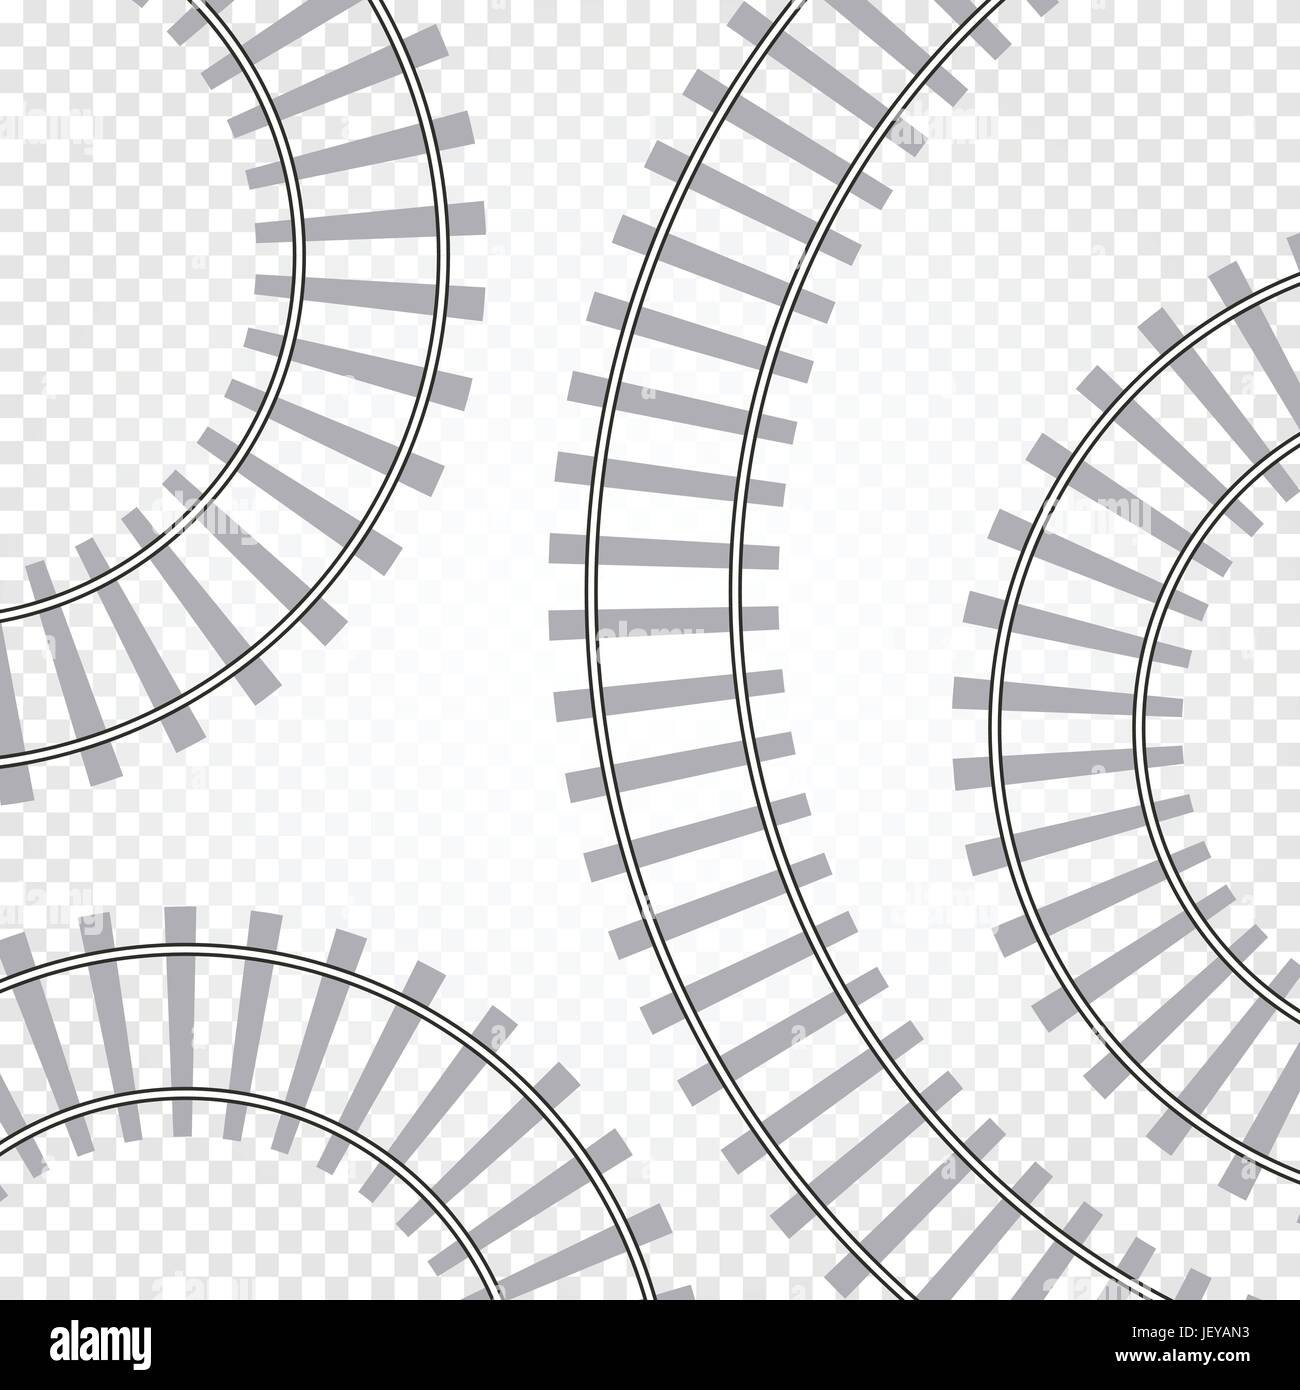 Rail railroad track vector illustration. Railway train isolated. Winding path road Stock Vector